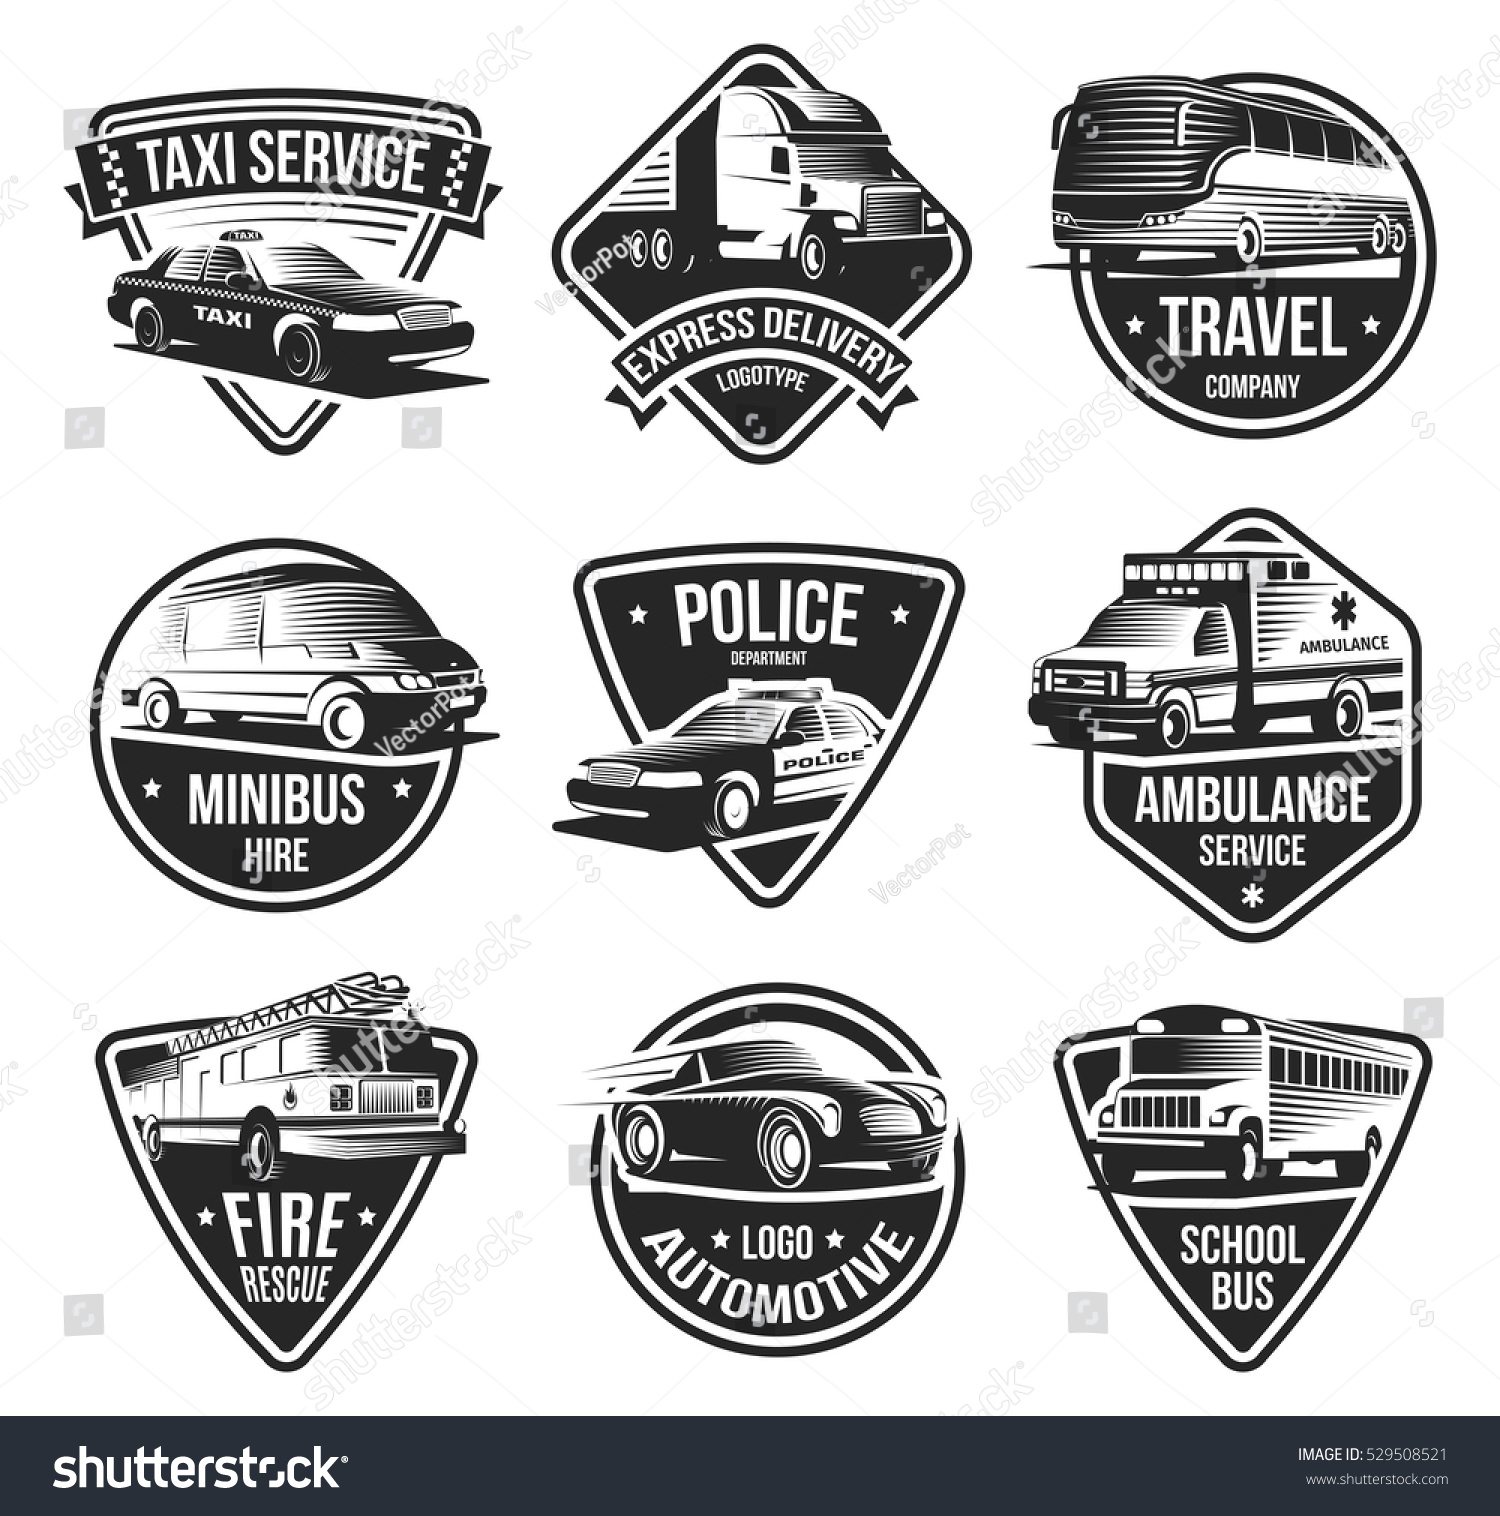 Transportation Safety Logos